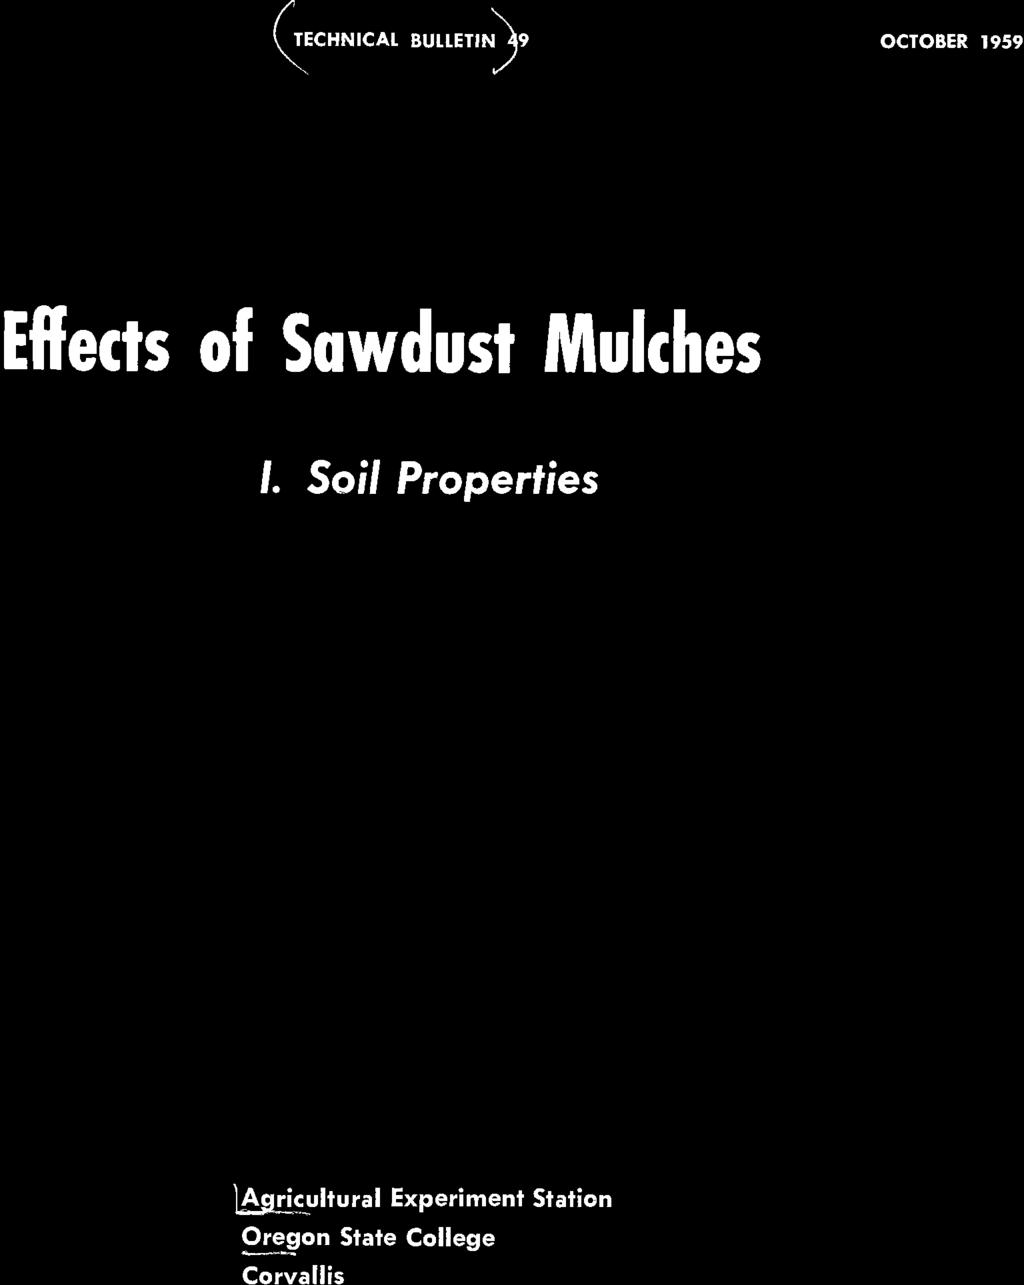 Soil Properties R. K.